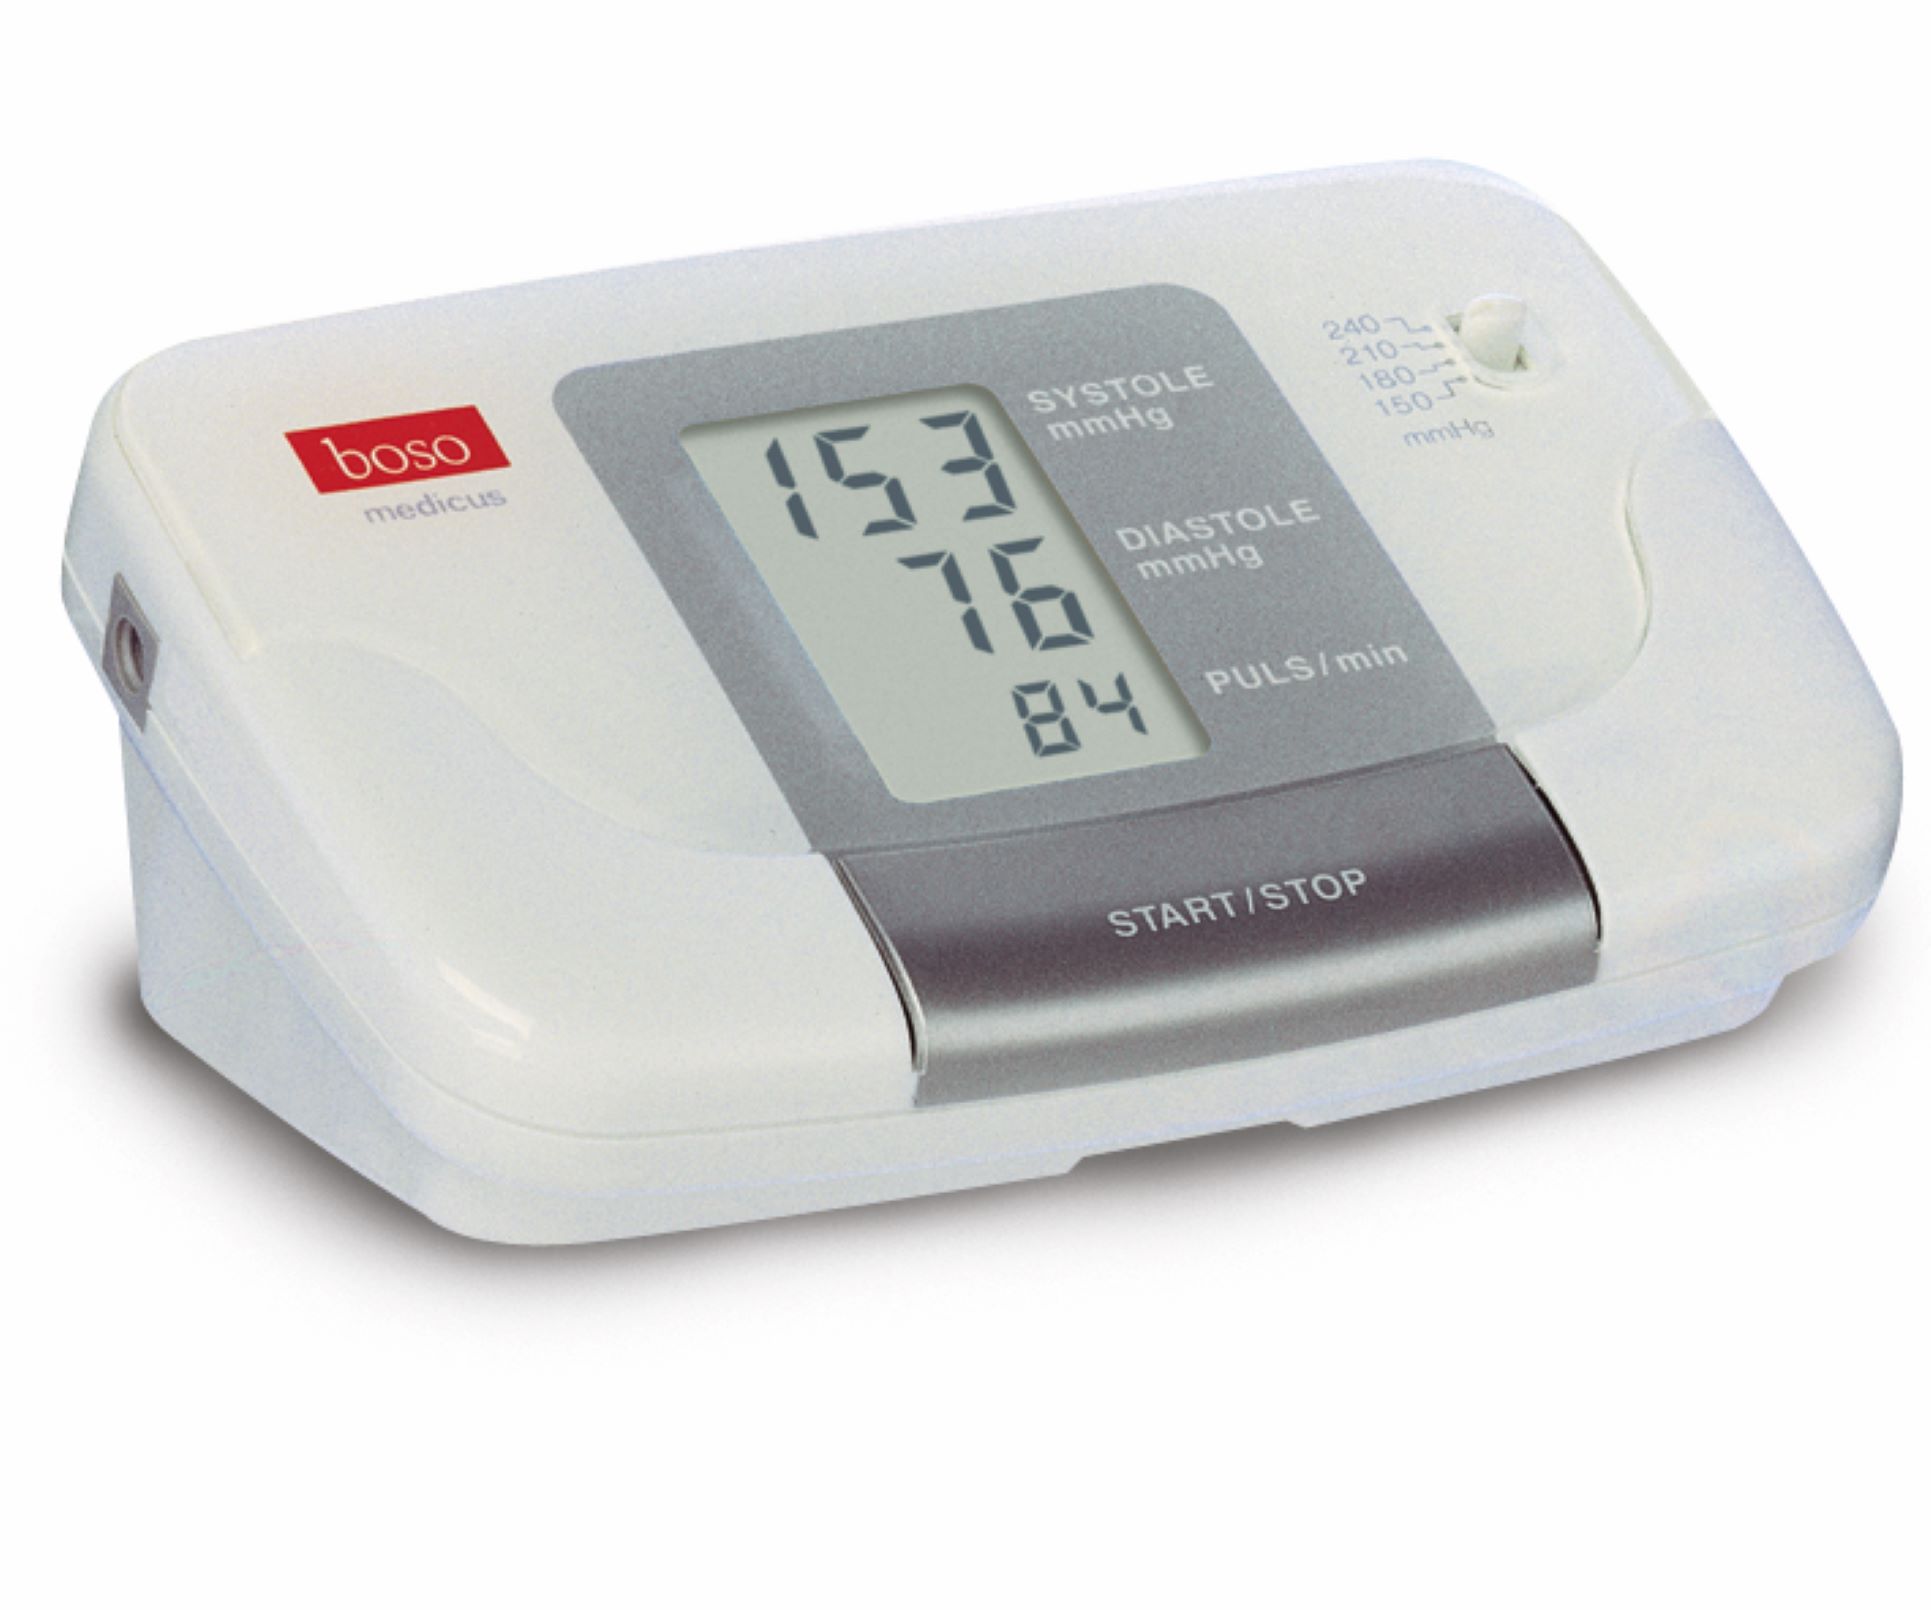 Boso Medicus Vollautomatisches Blutdruckmessgerät